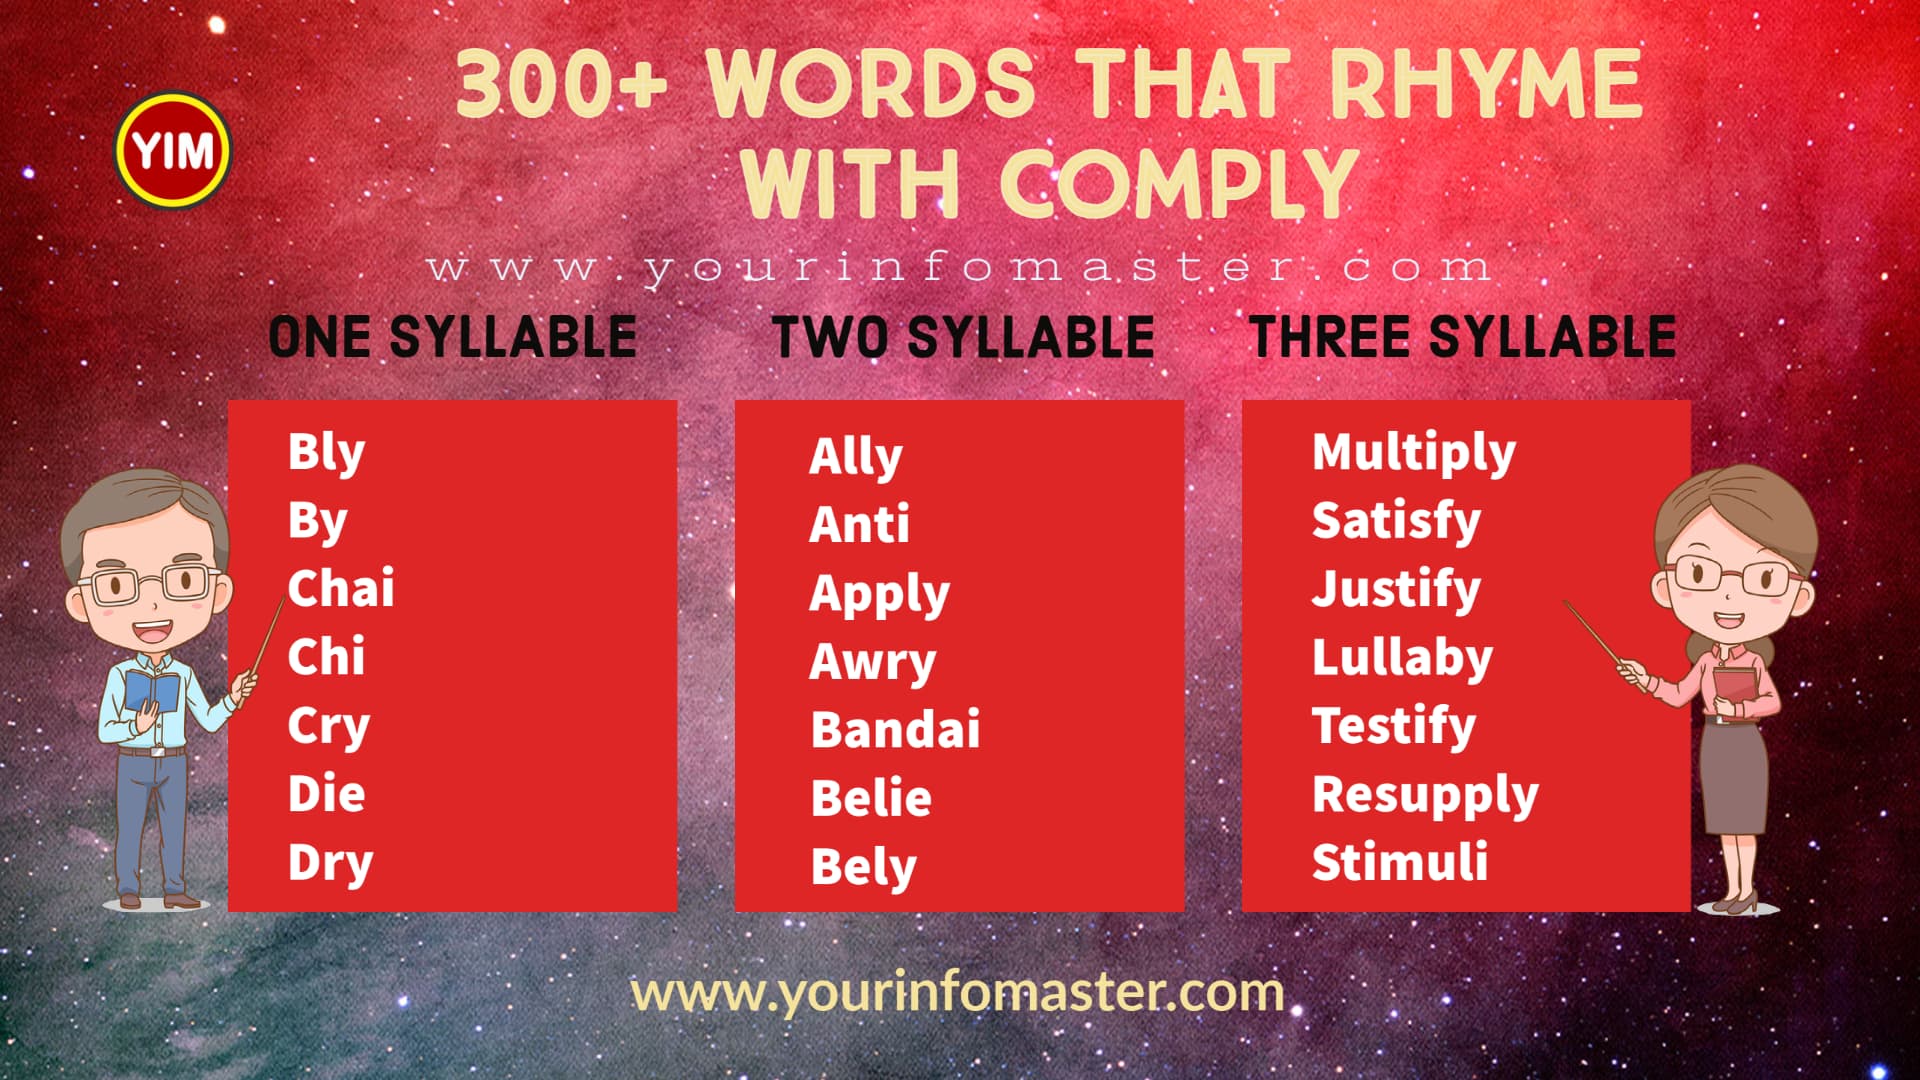 100 rhyming words, 1000 rhyming words, 200+ Interesting Words, 200+ Useful Words, 300 rhyming words list, 50 rhyming words list, 500 rhyming words, all words that rhyme with Comply, Another word for Comply, are rhyming words, Comply rhyme, Comply rhyme examples, Comply Rhyming words, how to teach rhyming words, Interesting Words that Rhyme in English, Printable Infographics, Printable Worksheets, rhymes English words, rhymes with Comply infographics, rhyming pairs, Rhyming Words, rhyming words for Comply, Rhyming Words for Kids, Rhyming Words List, Things that rhyme with Comply, what are rhyming words, what rhymes with Comply, words rhyming with Comply, Words that Rhyme, Words That Rhyme with Comply